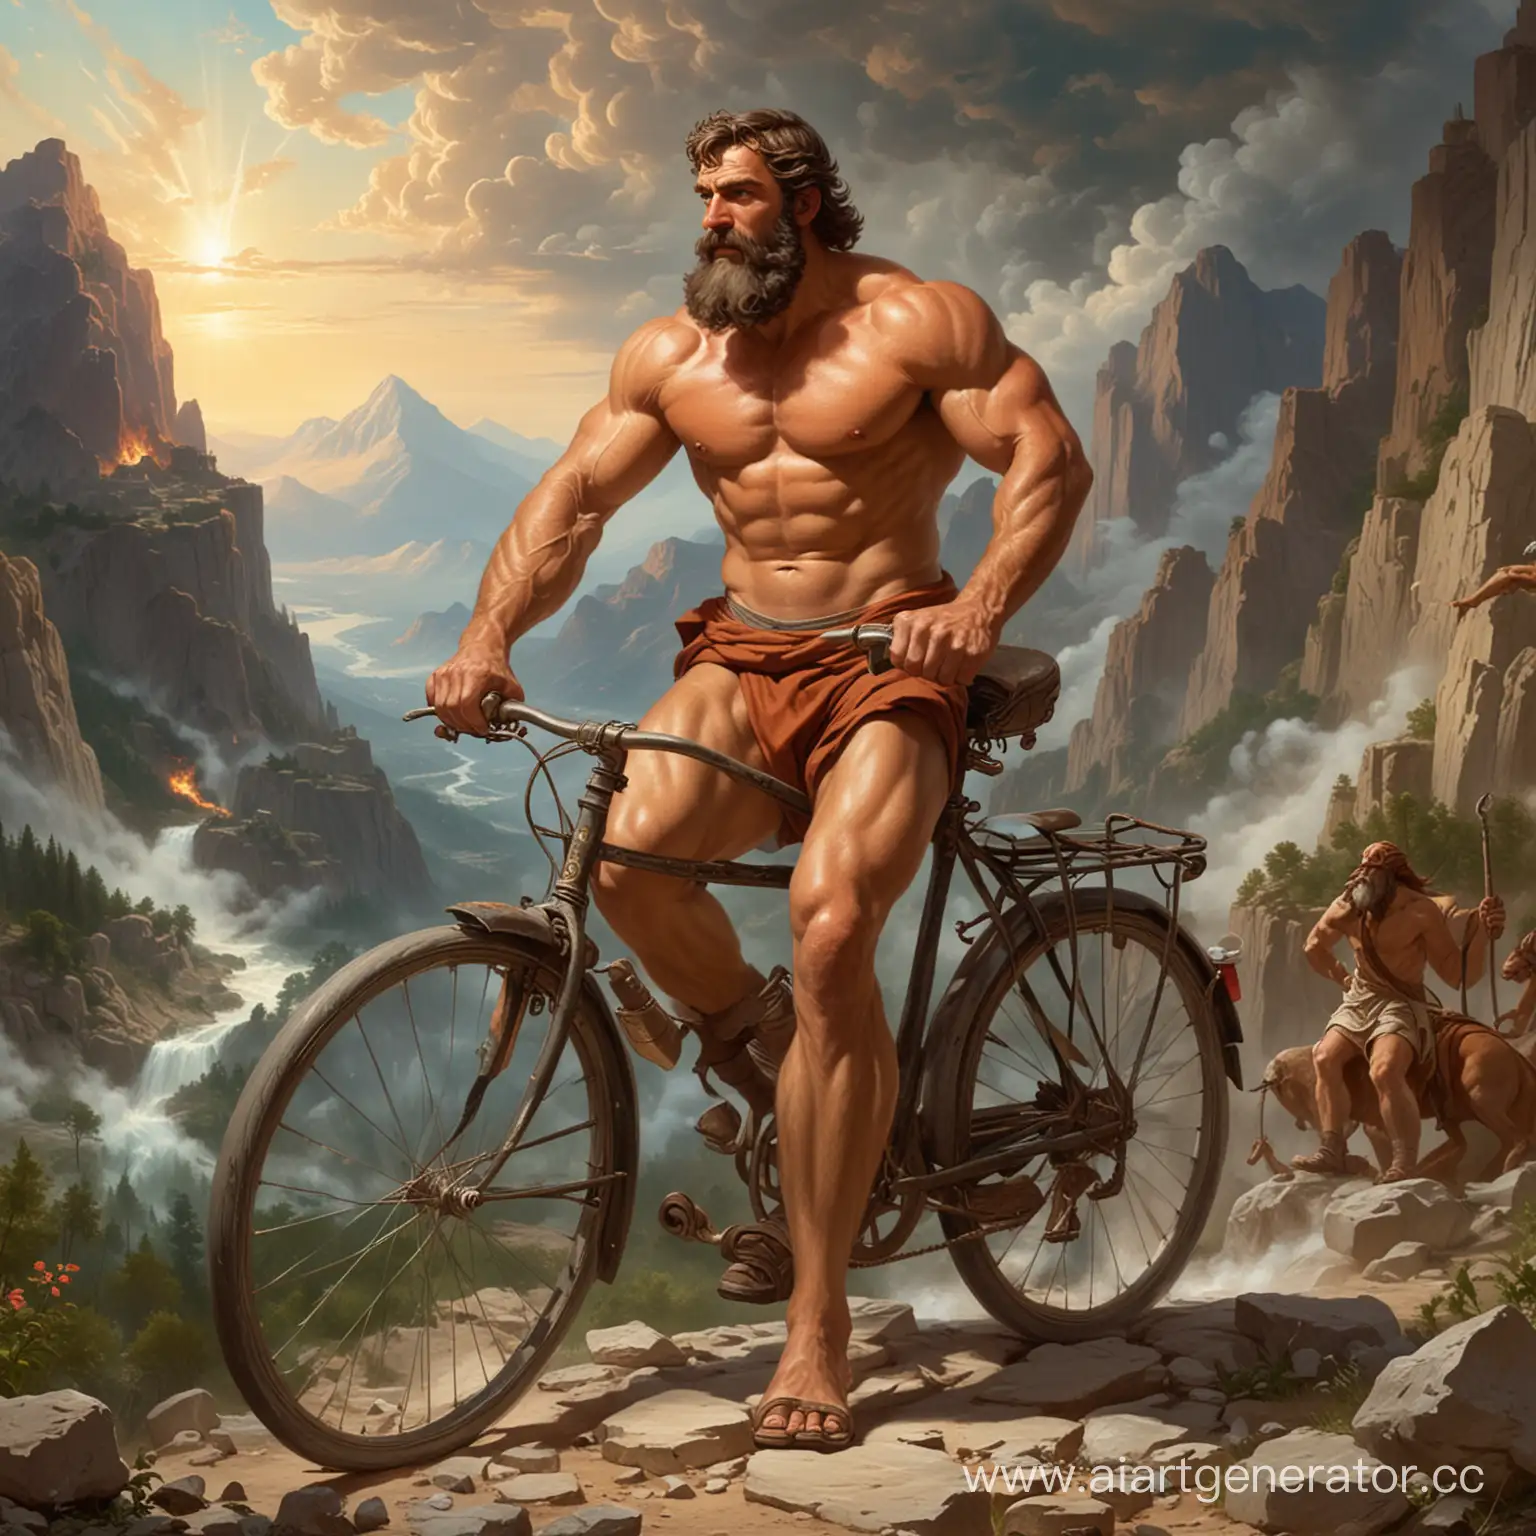 Hephaestus-the-Blacksmith-Deity-Descends-Mount-Olympus-on-a-Modern-Bicycle